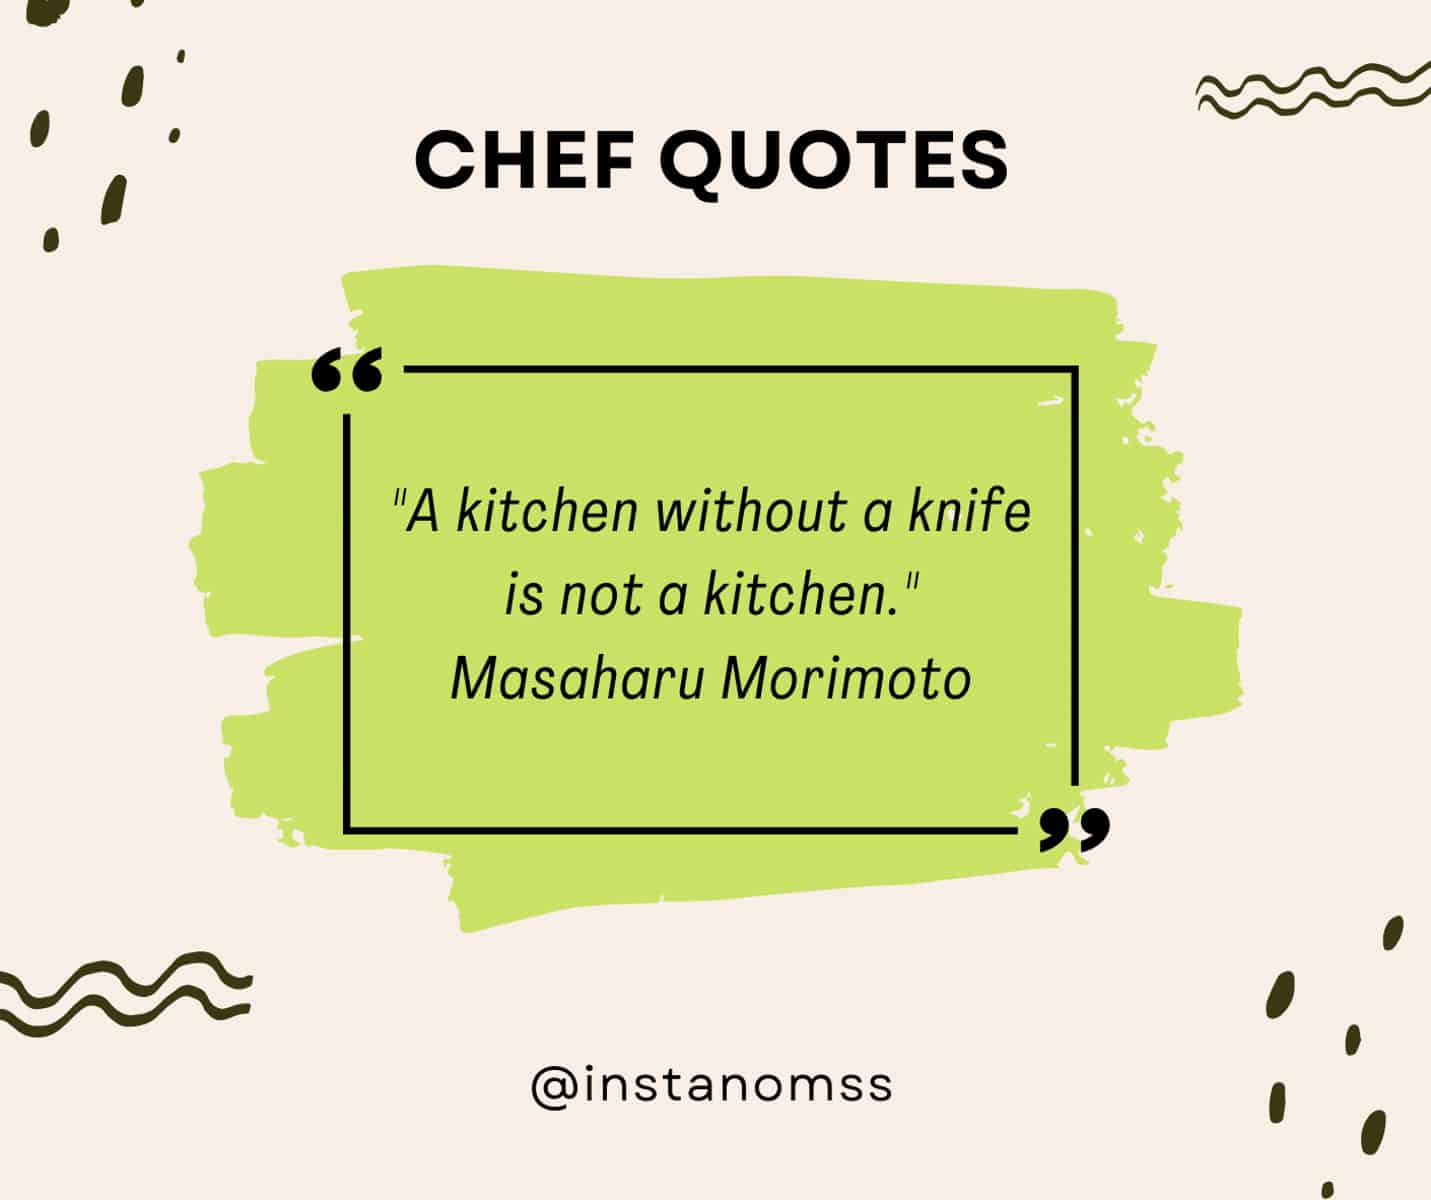 "A kitchen without a knife is not a kitchen." Masaharu Morimoto